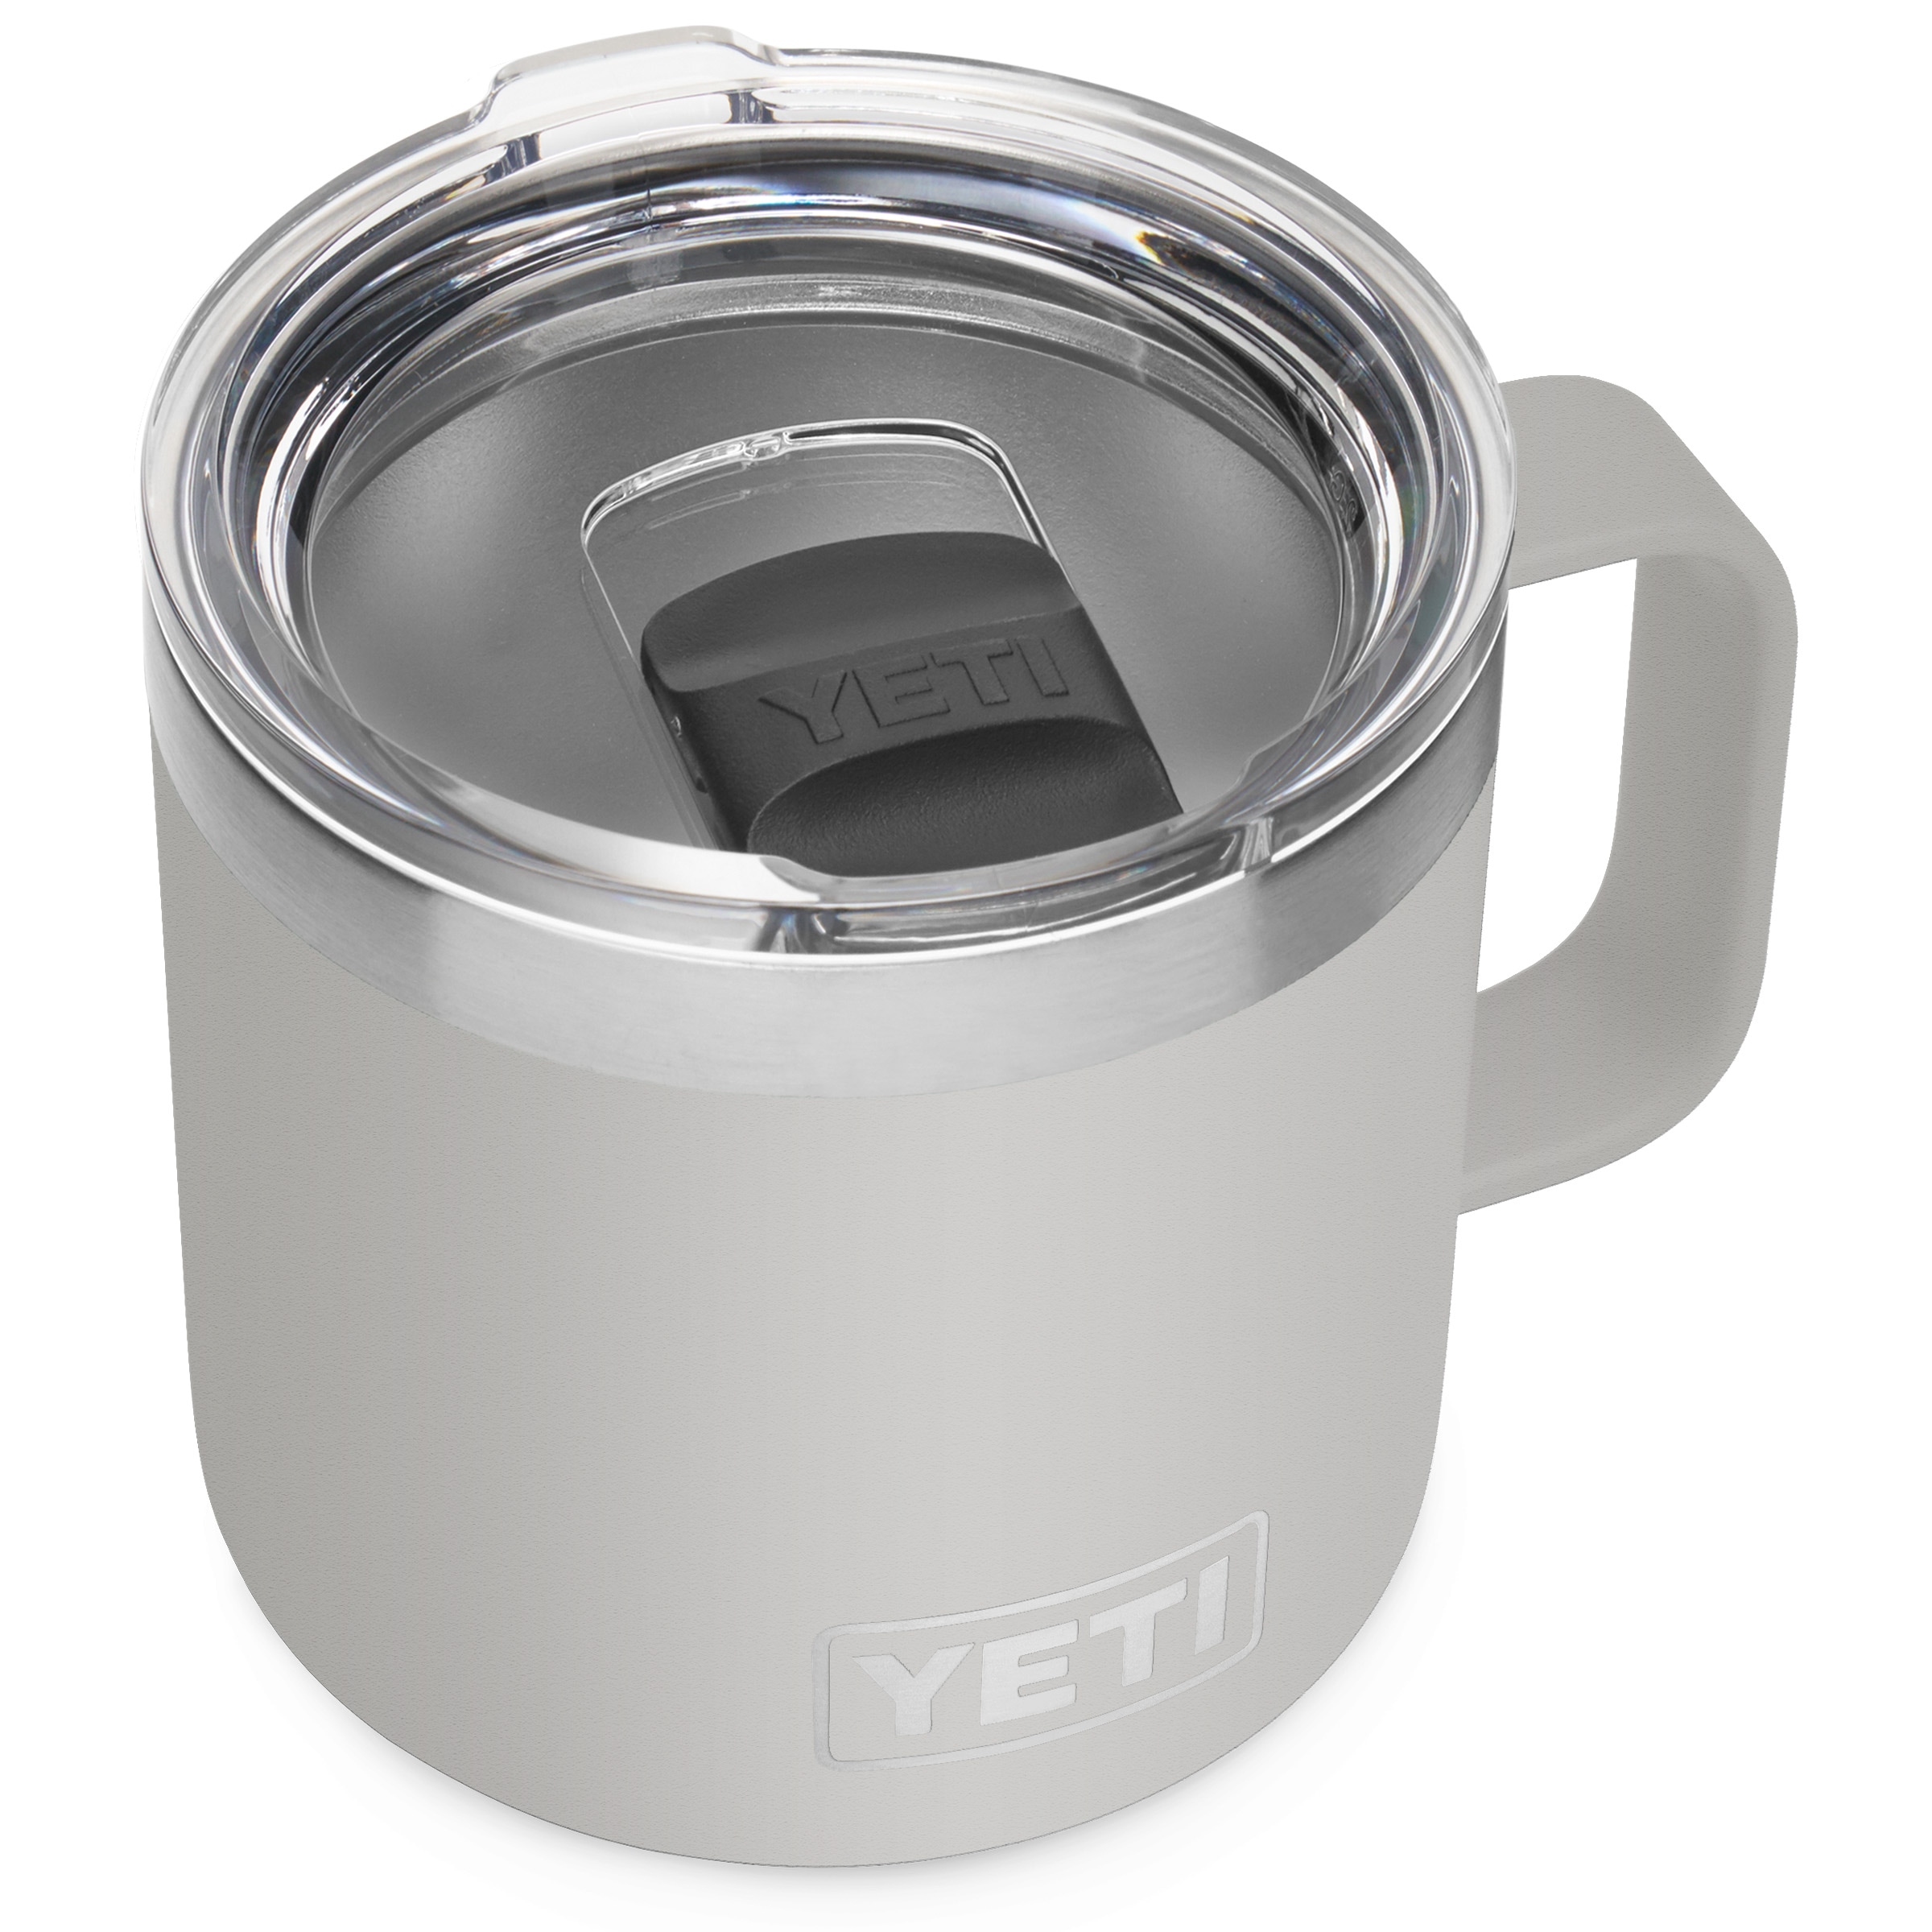 YETI Recalls Thousands of Travel Mugs, Lids